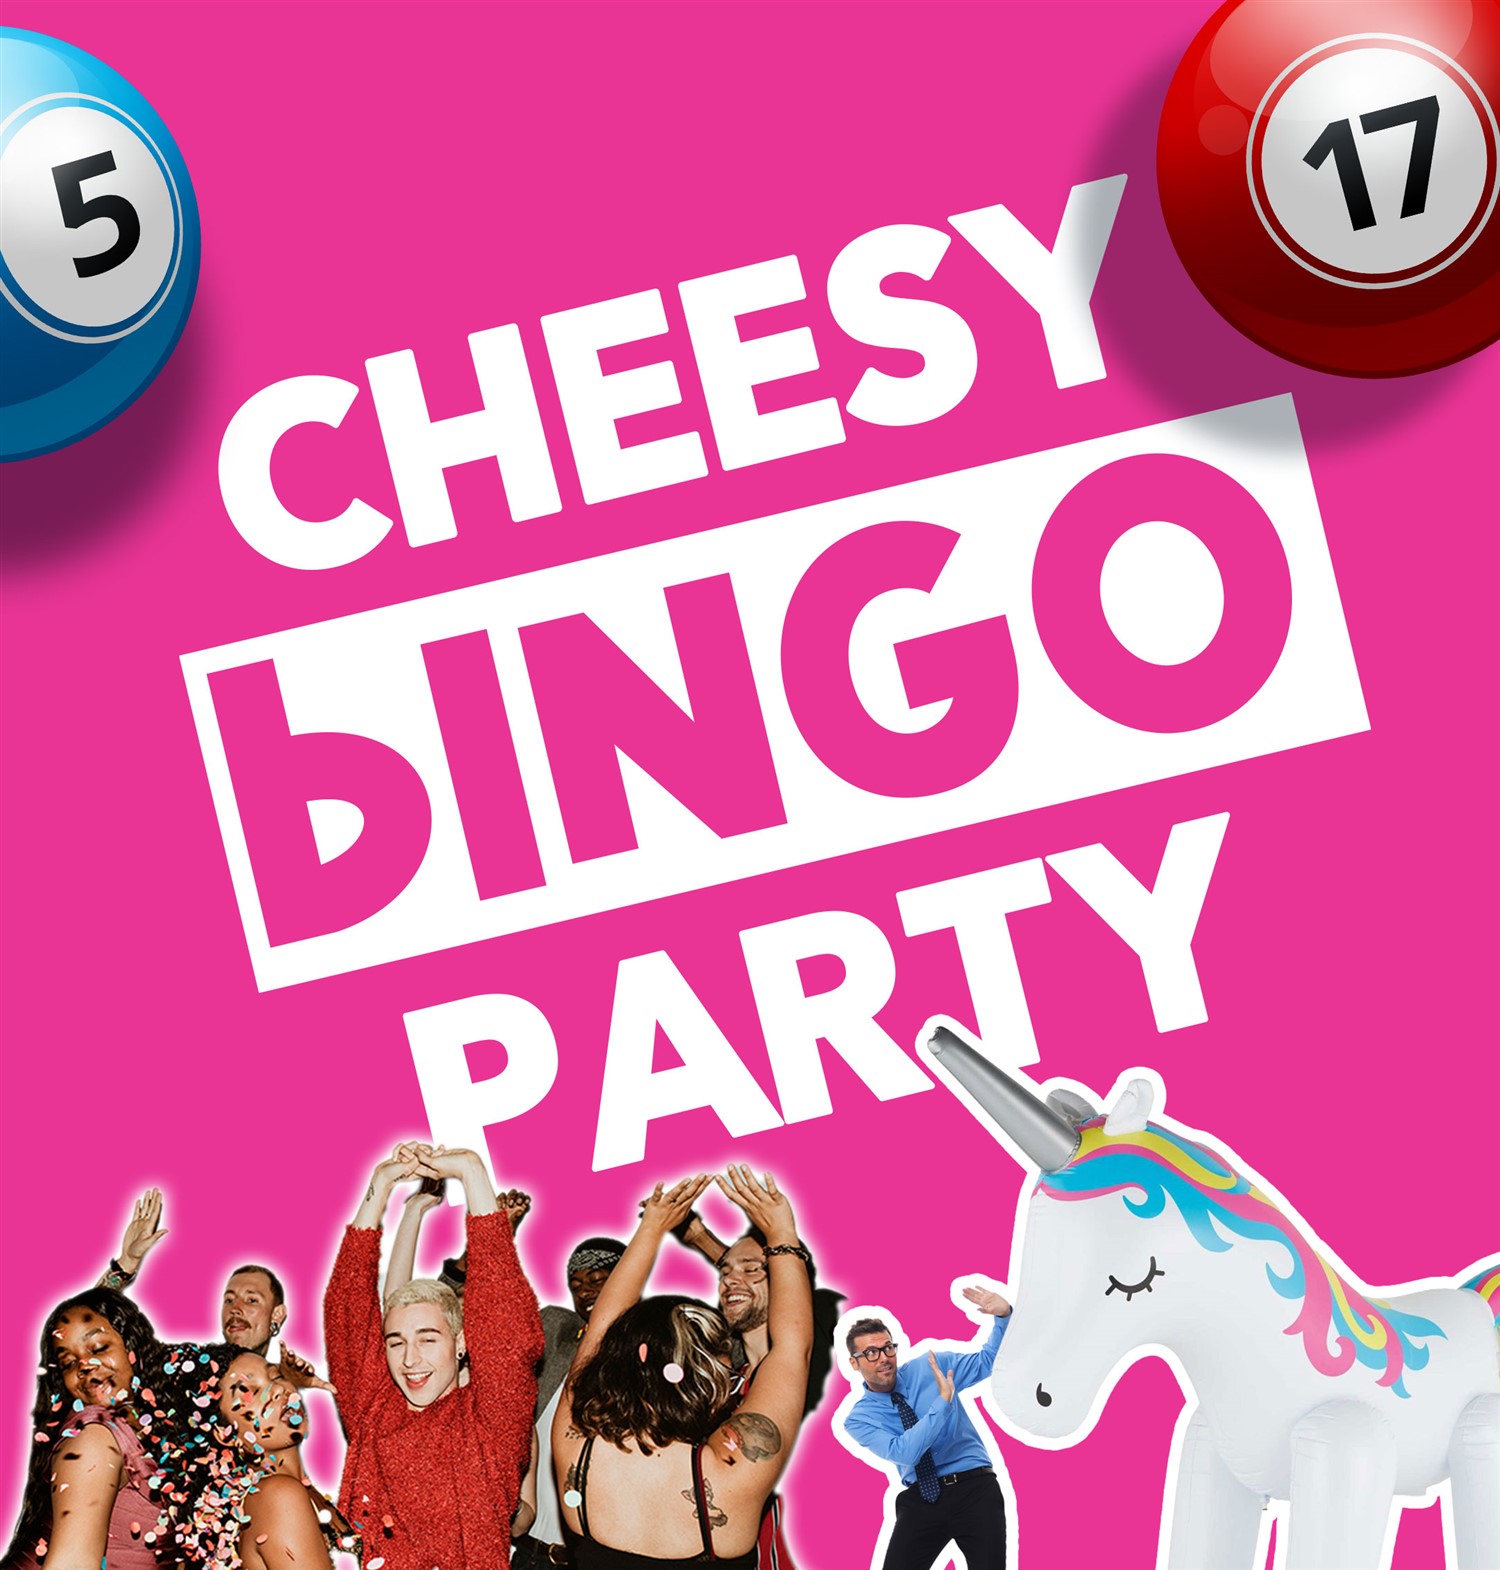 Cheesy Bingo Party Cheesy Bingo on juil. 12, 19:30@Sutton Coldfield Town Hall - Achetez des billets et obtenez des informations surSutton Coldfield Town Hall 